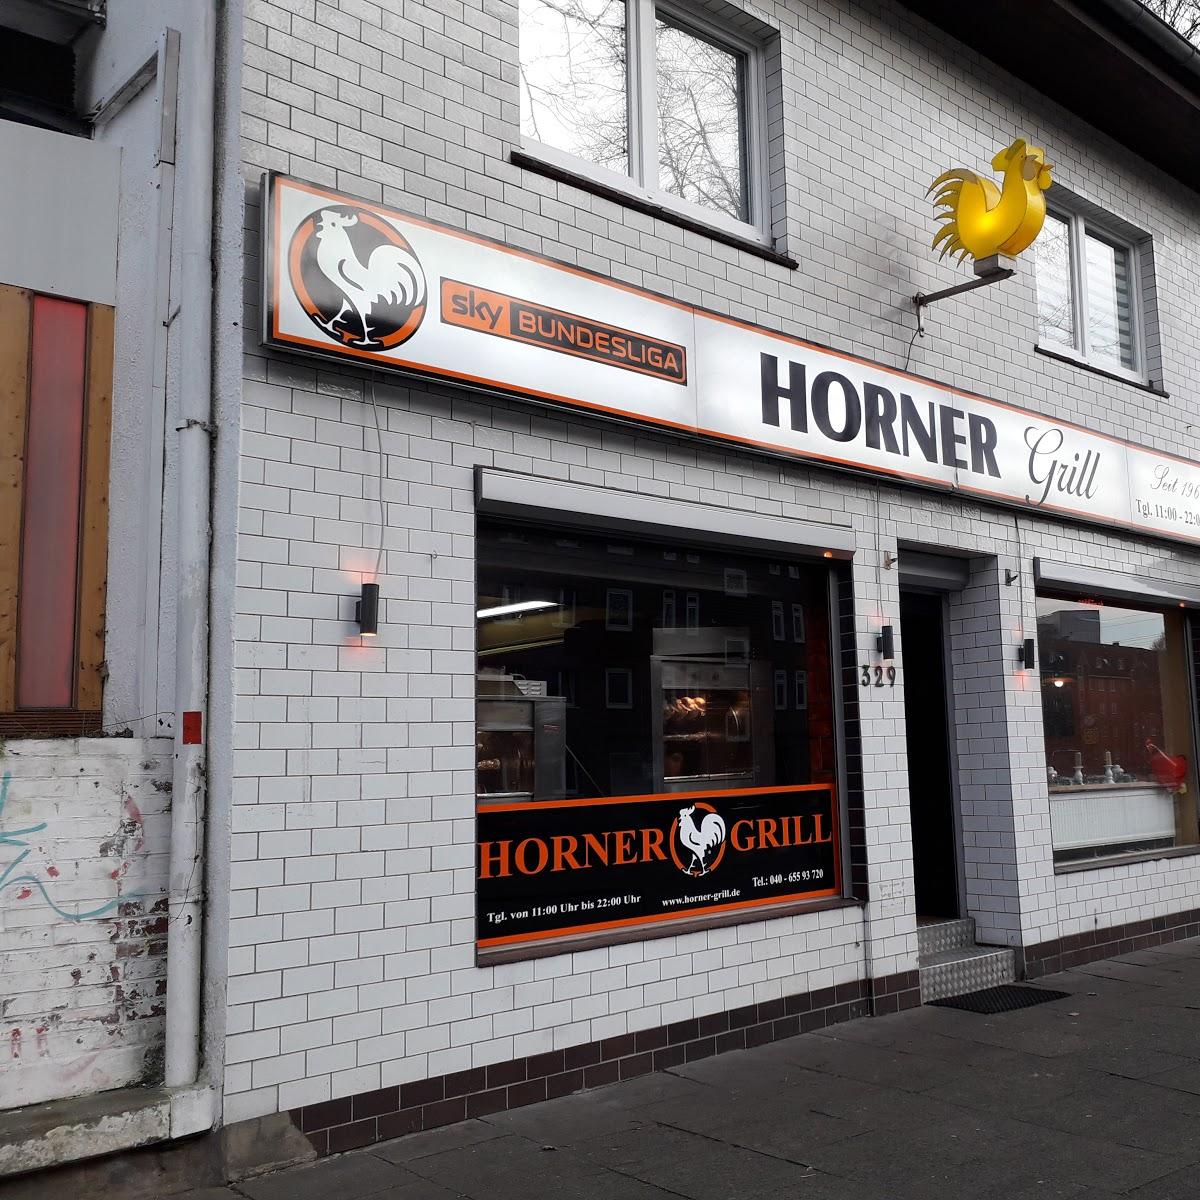 Restaurant "Horner Grill" in Hamburg